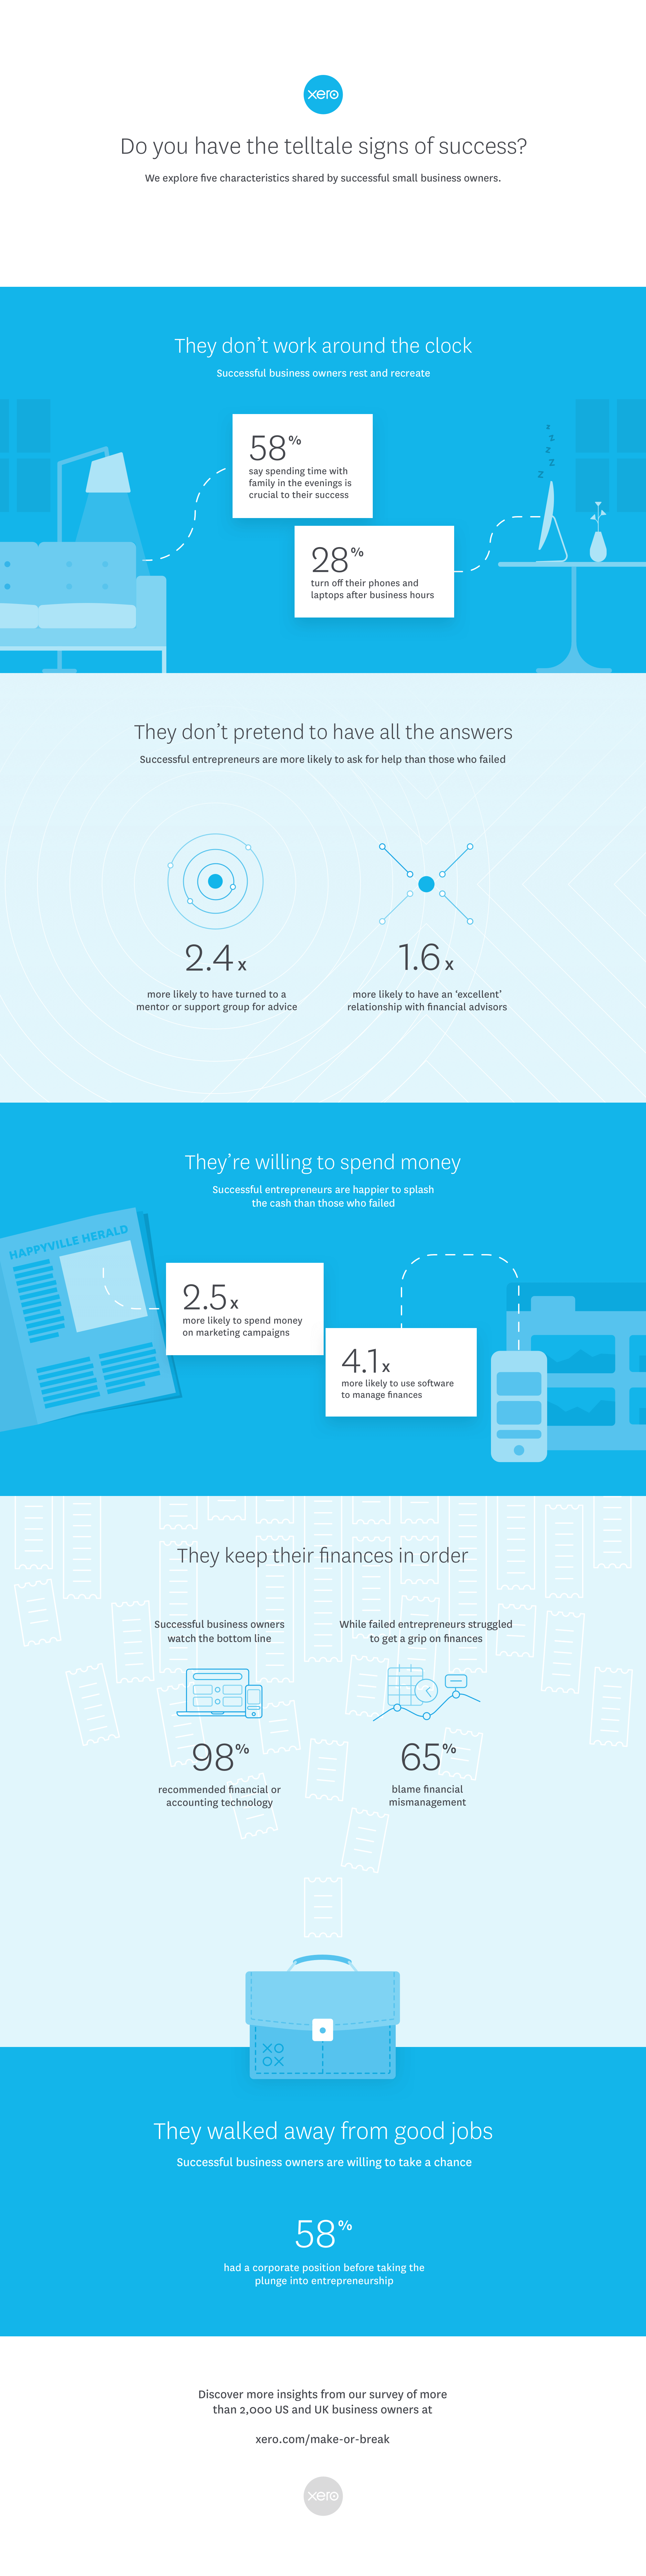 make-or-break-infographic